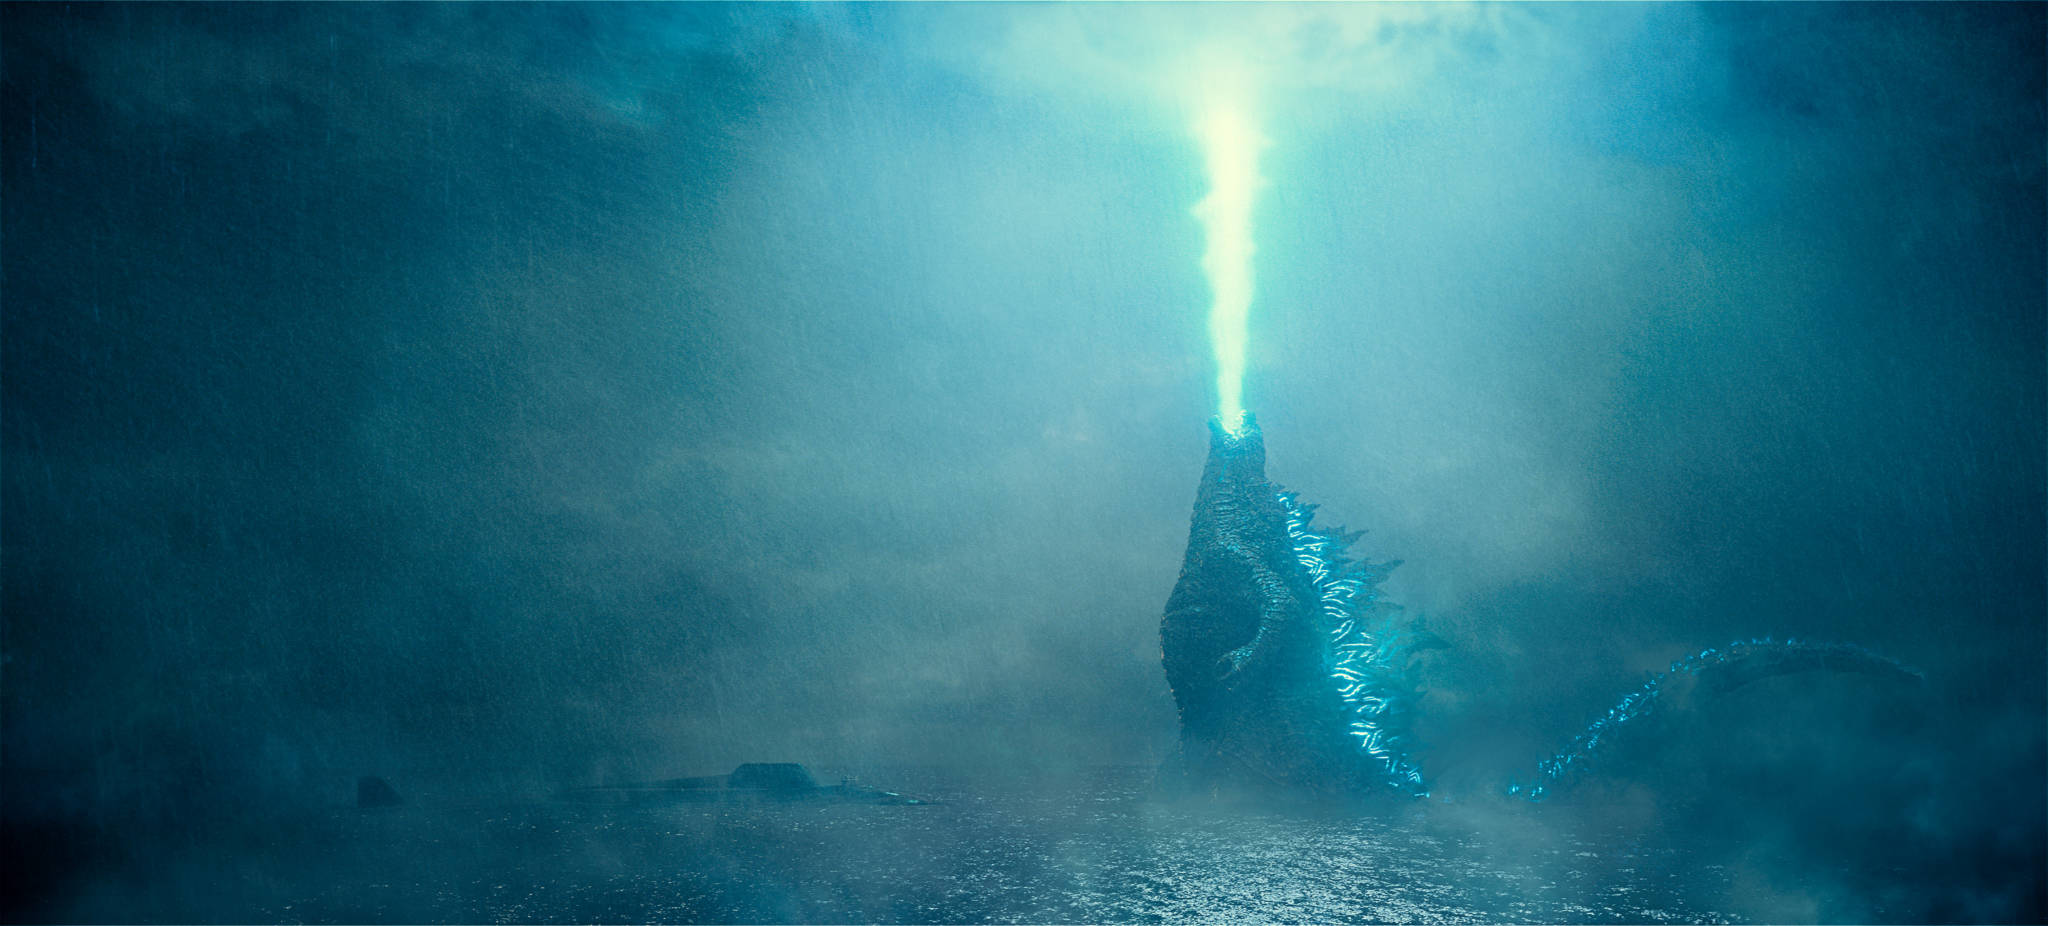 Godzilla 2: King of the monsters - La recensione - ProjectNerd.it